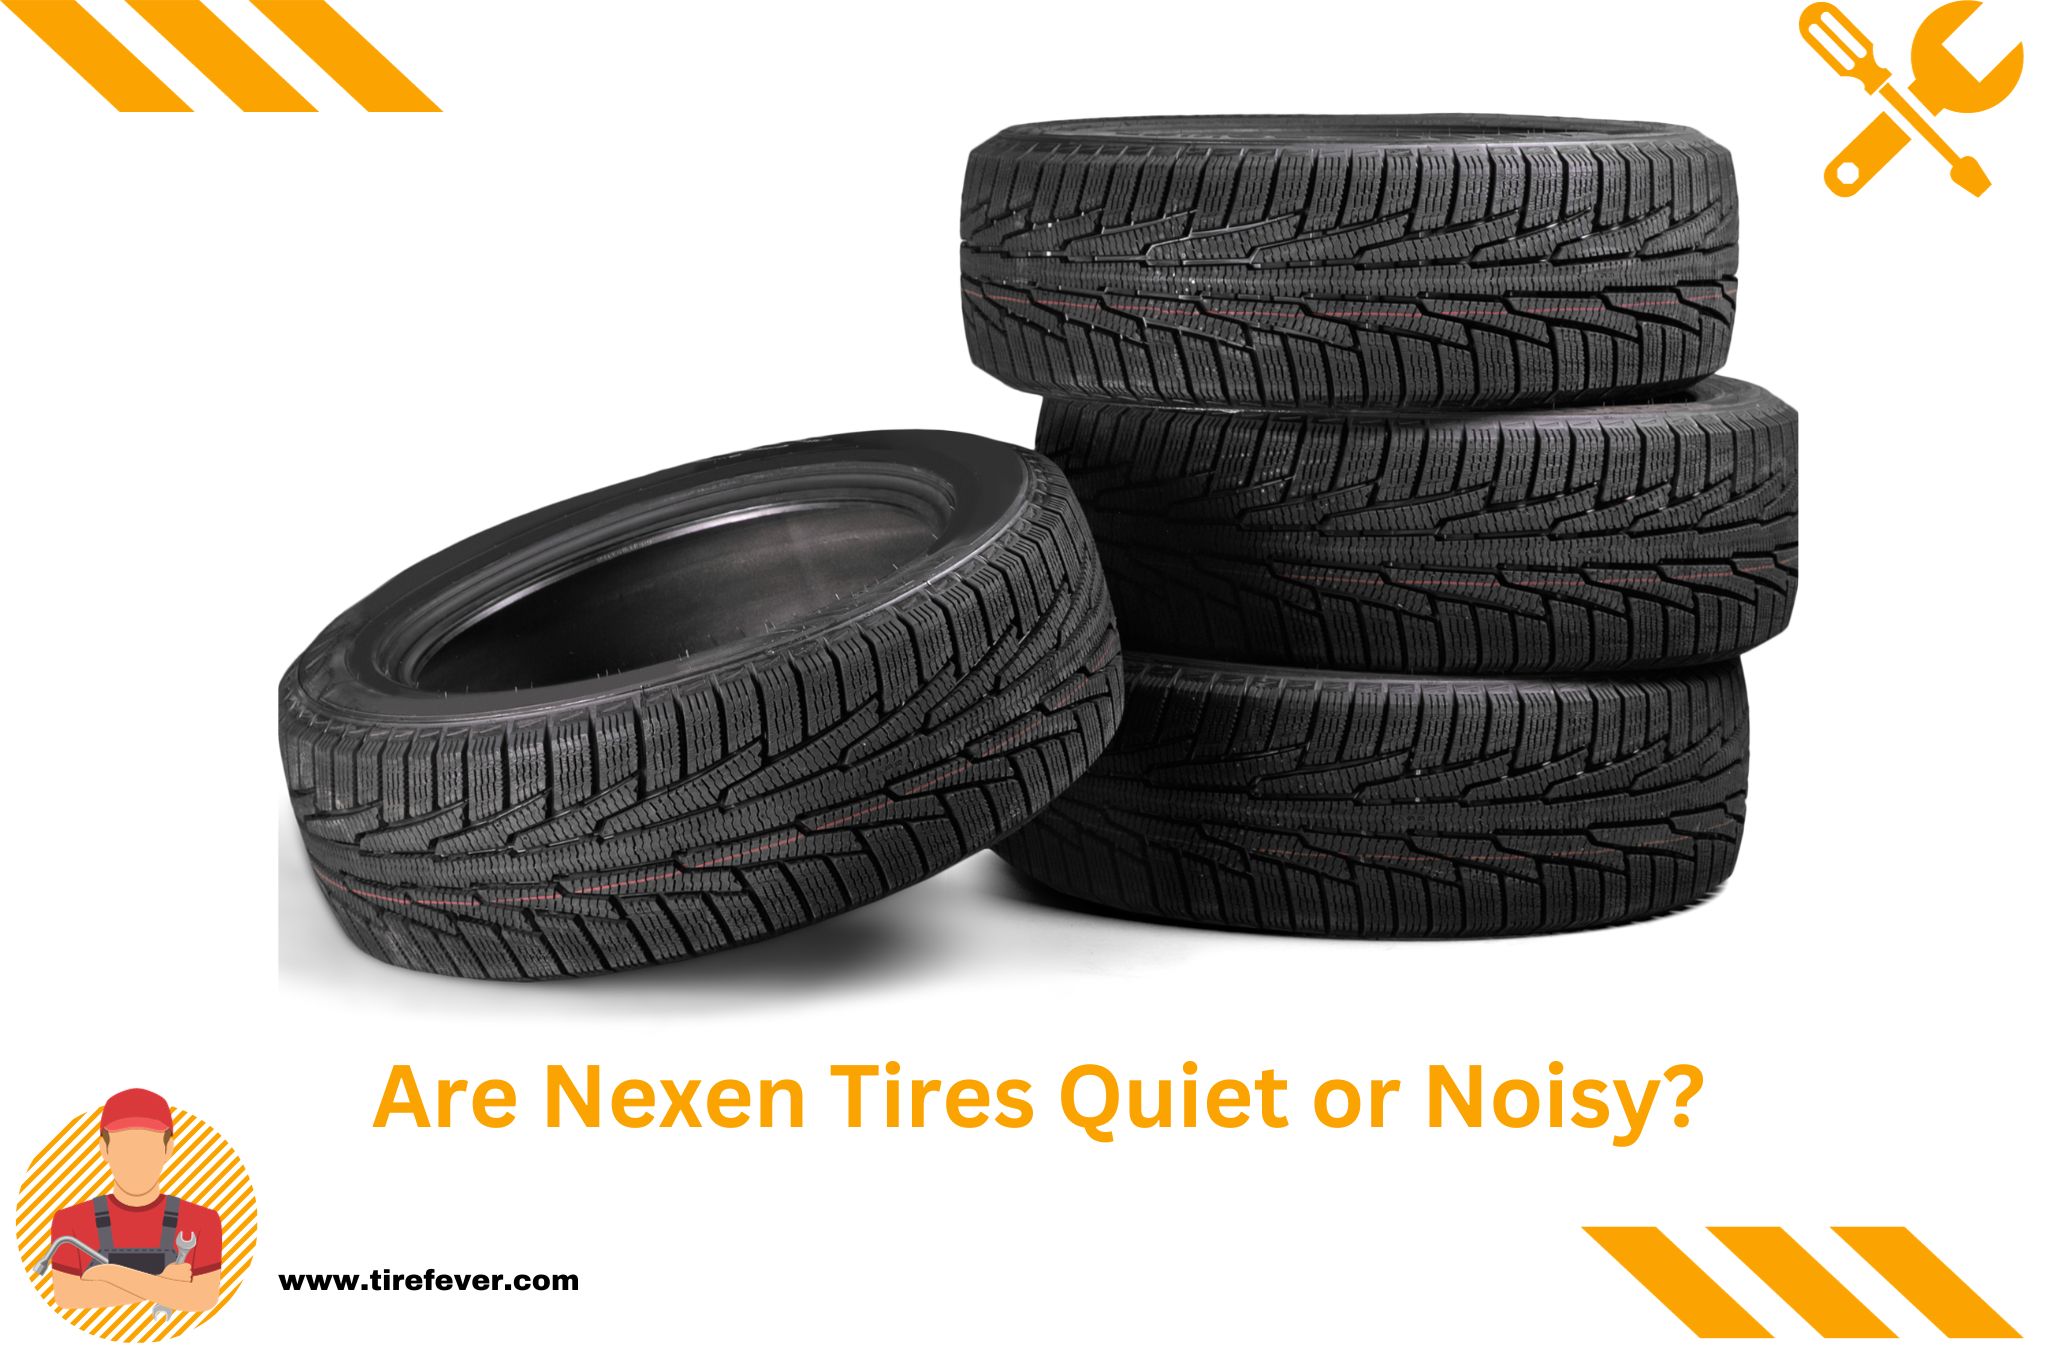 Are Nexen Tires Quiet or Noisy?